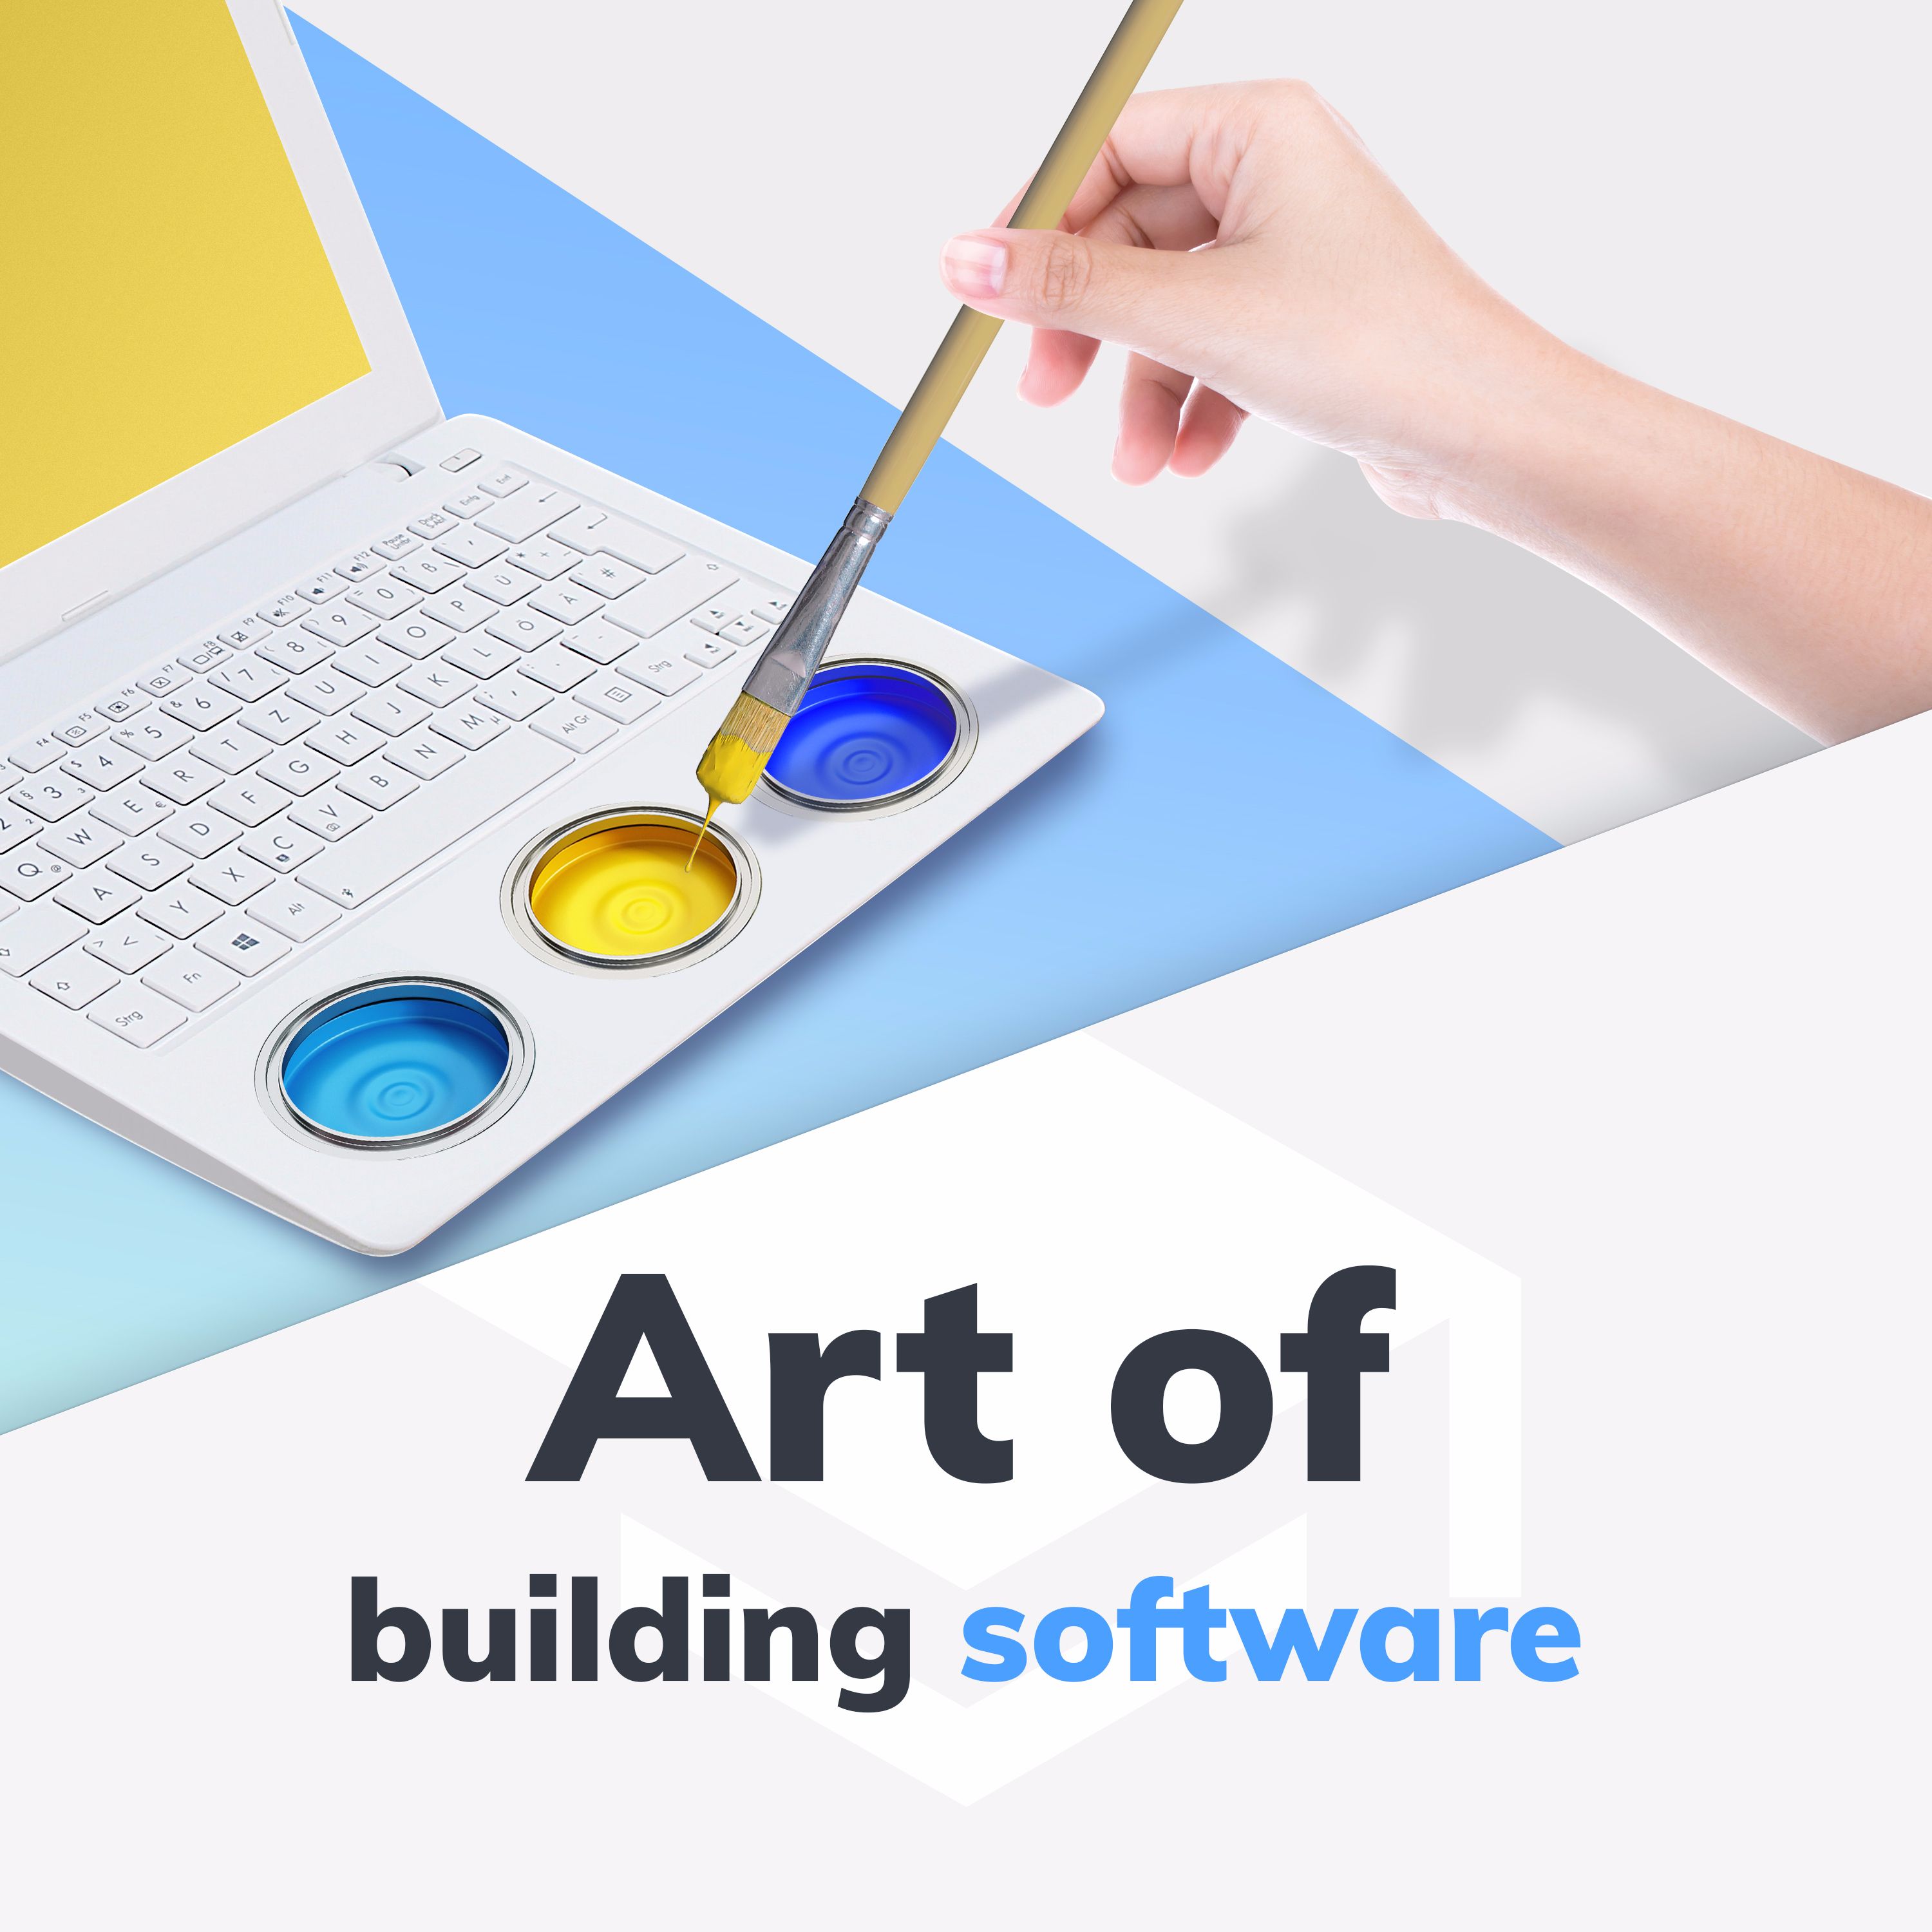 Art of building software